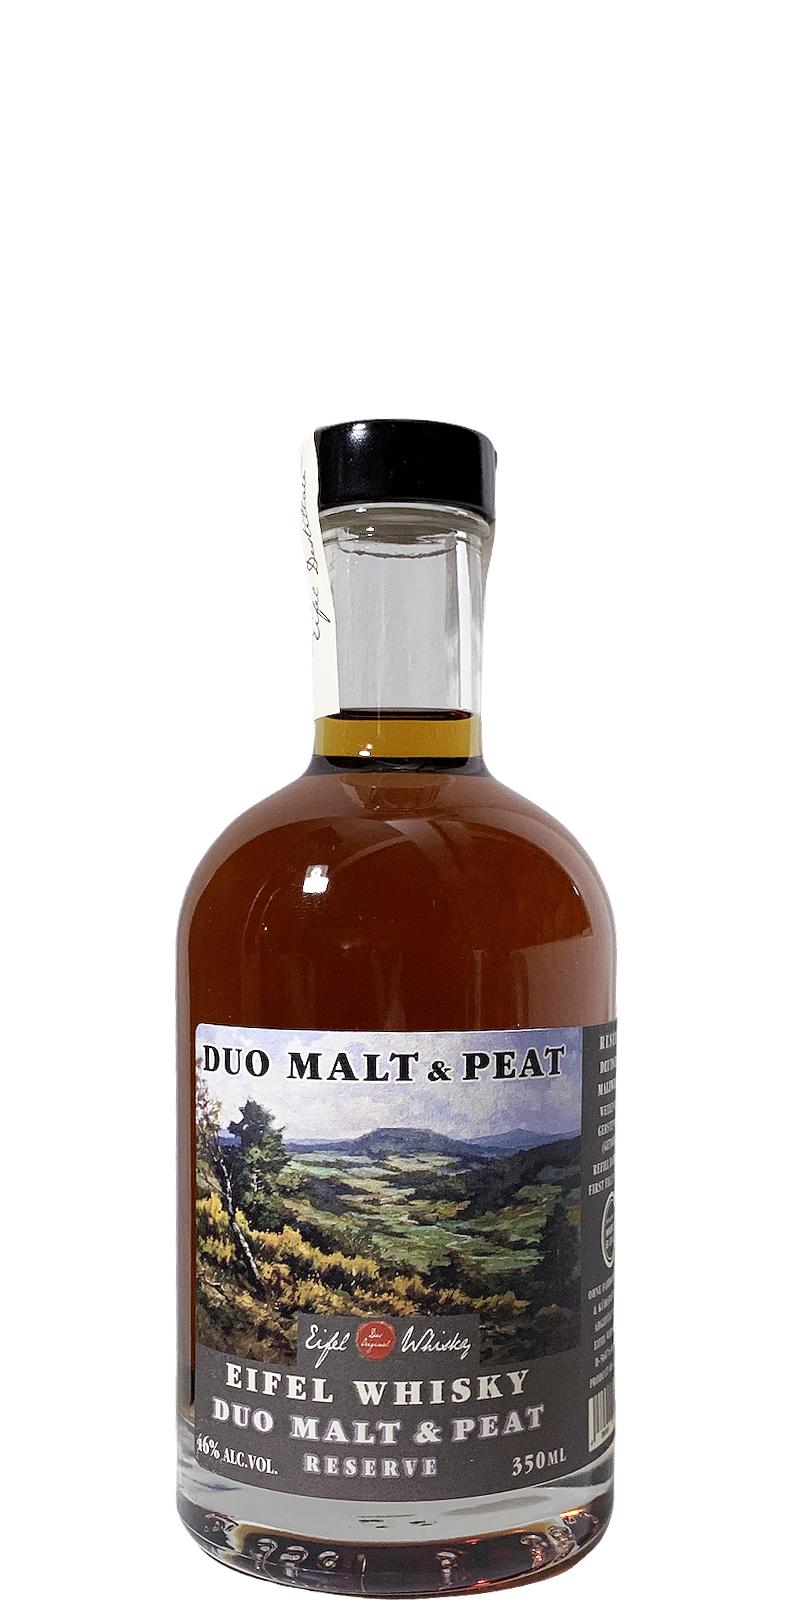 Eifel Whisky Duo Malt & Peat Reserve 46% 350ml